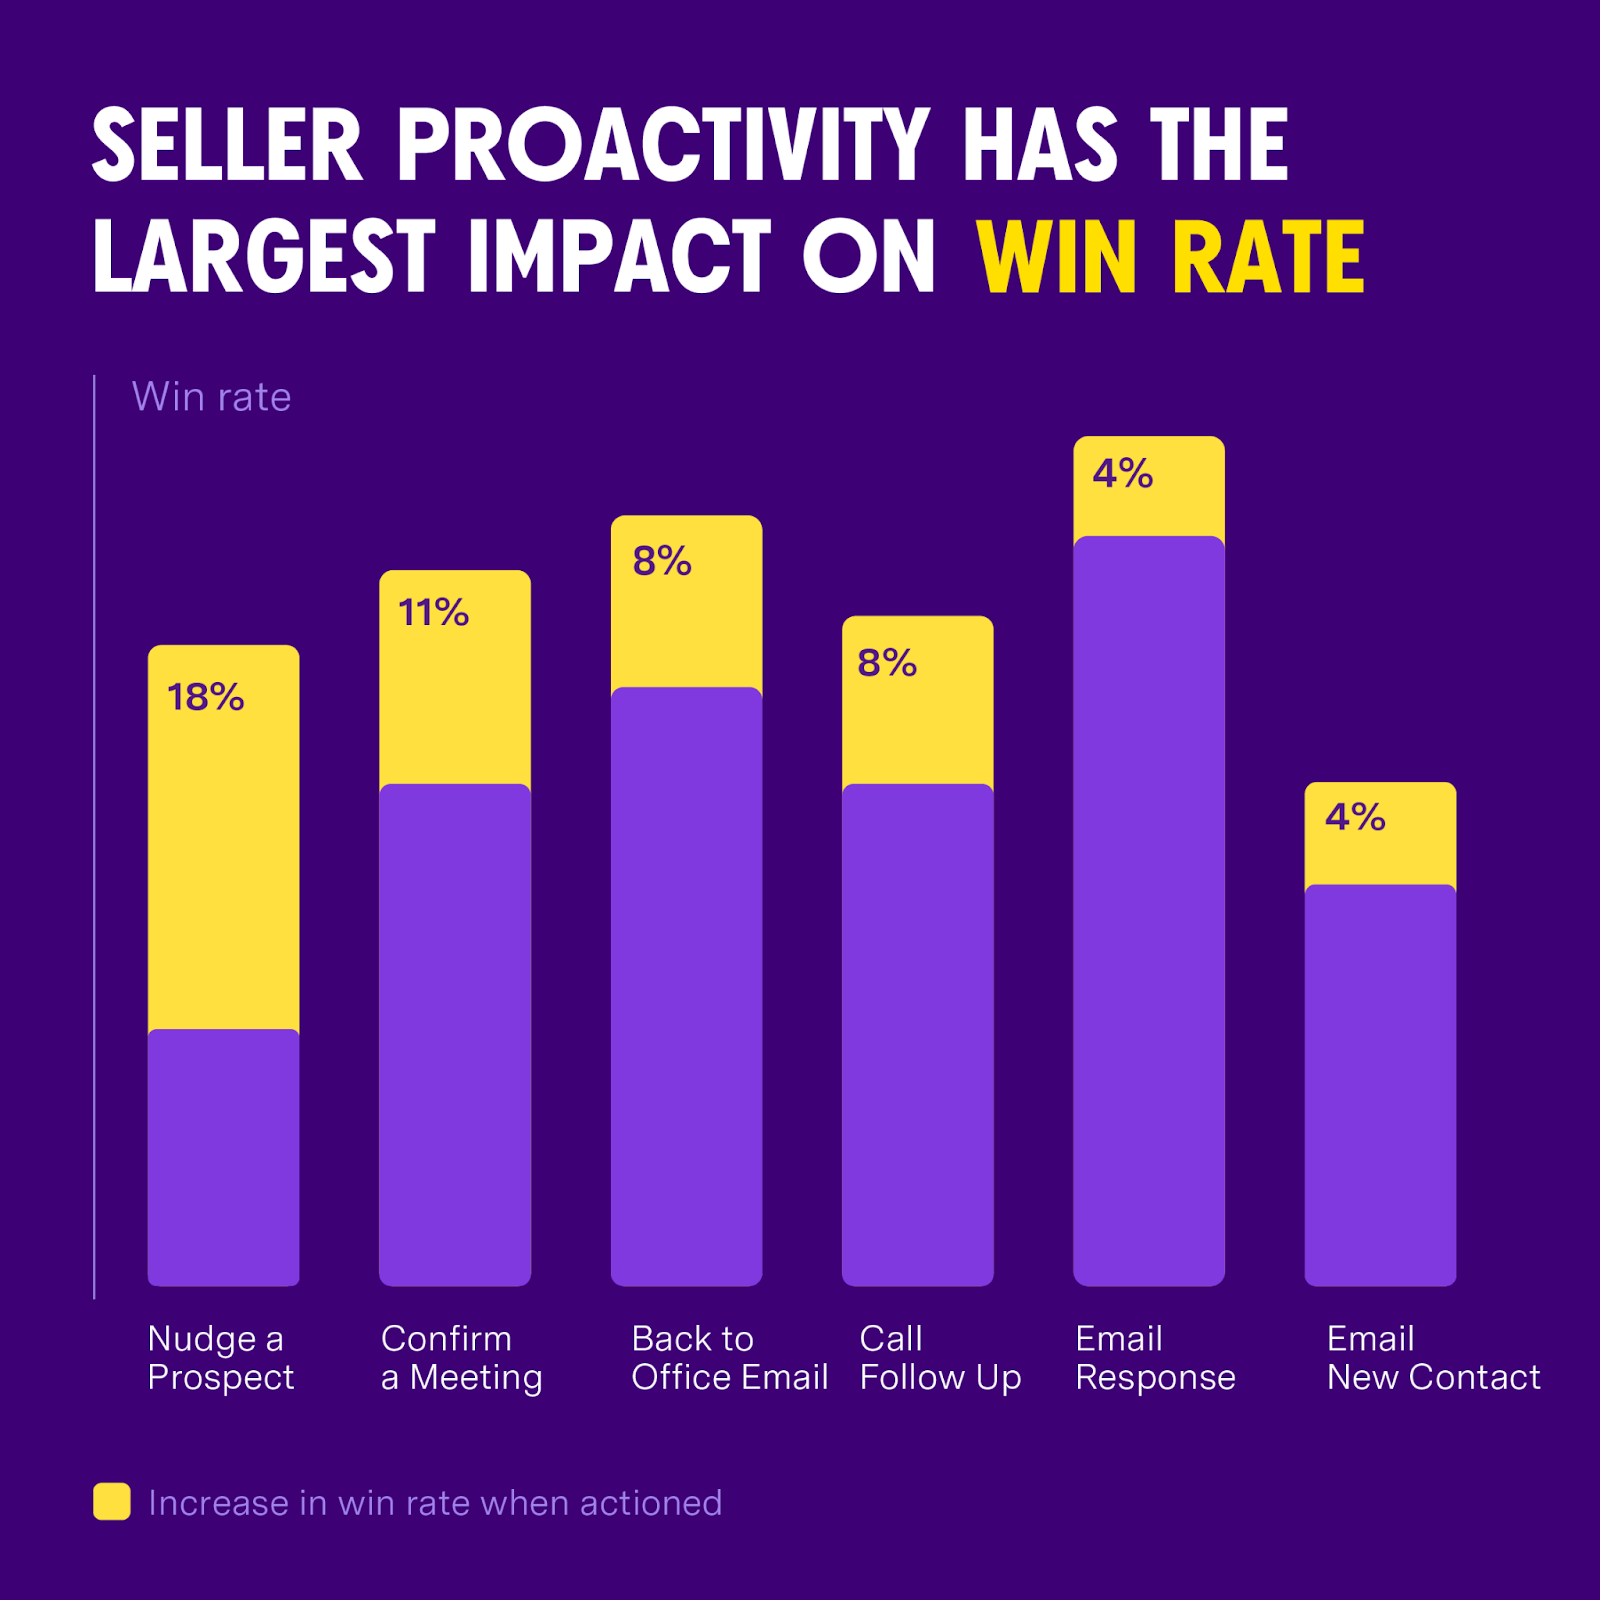 Bar graph illustrating the impact of seller proactivity